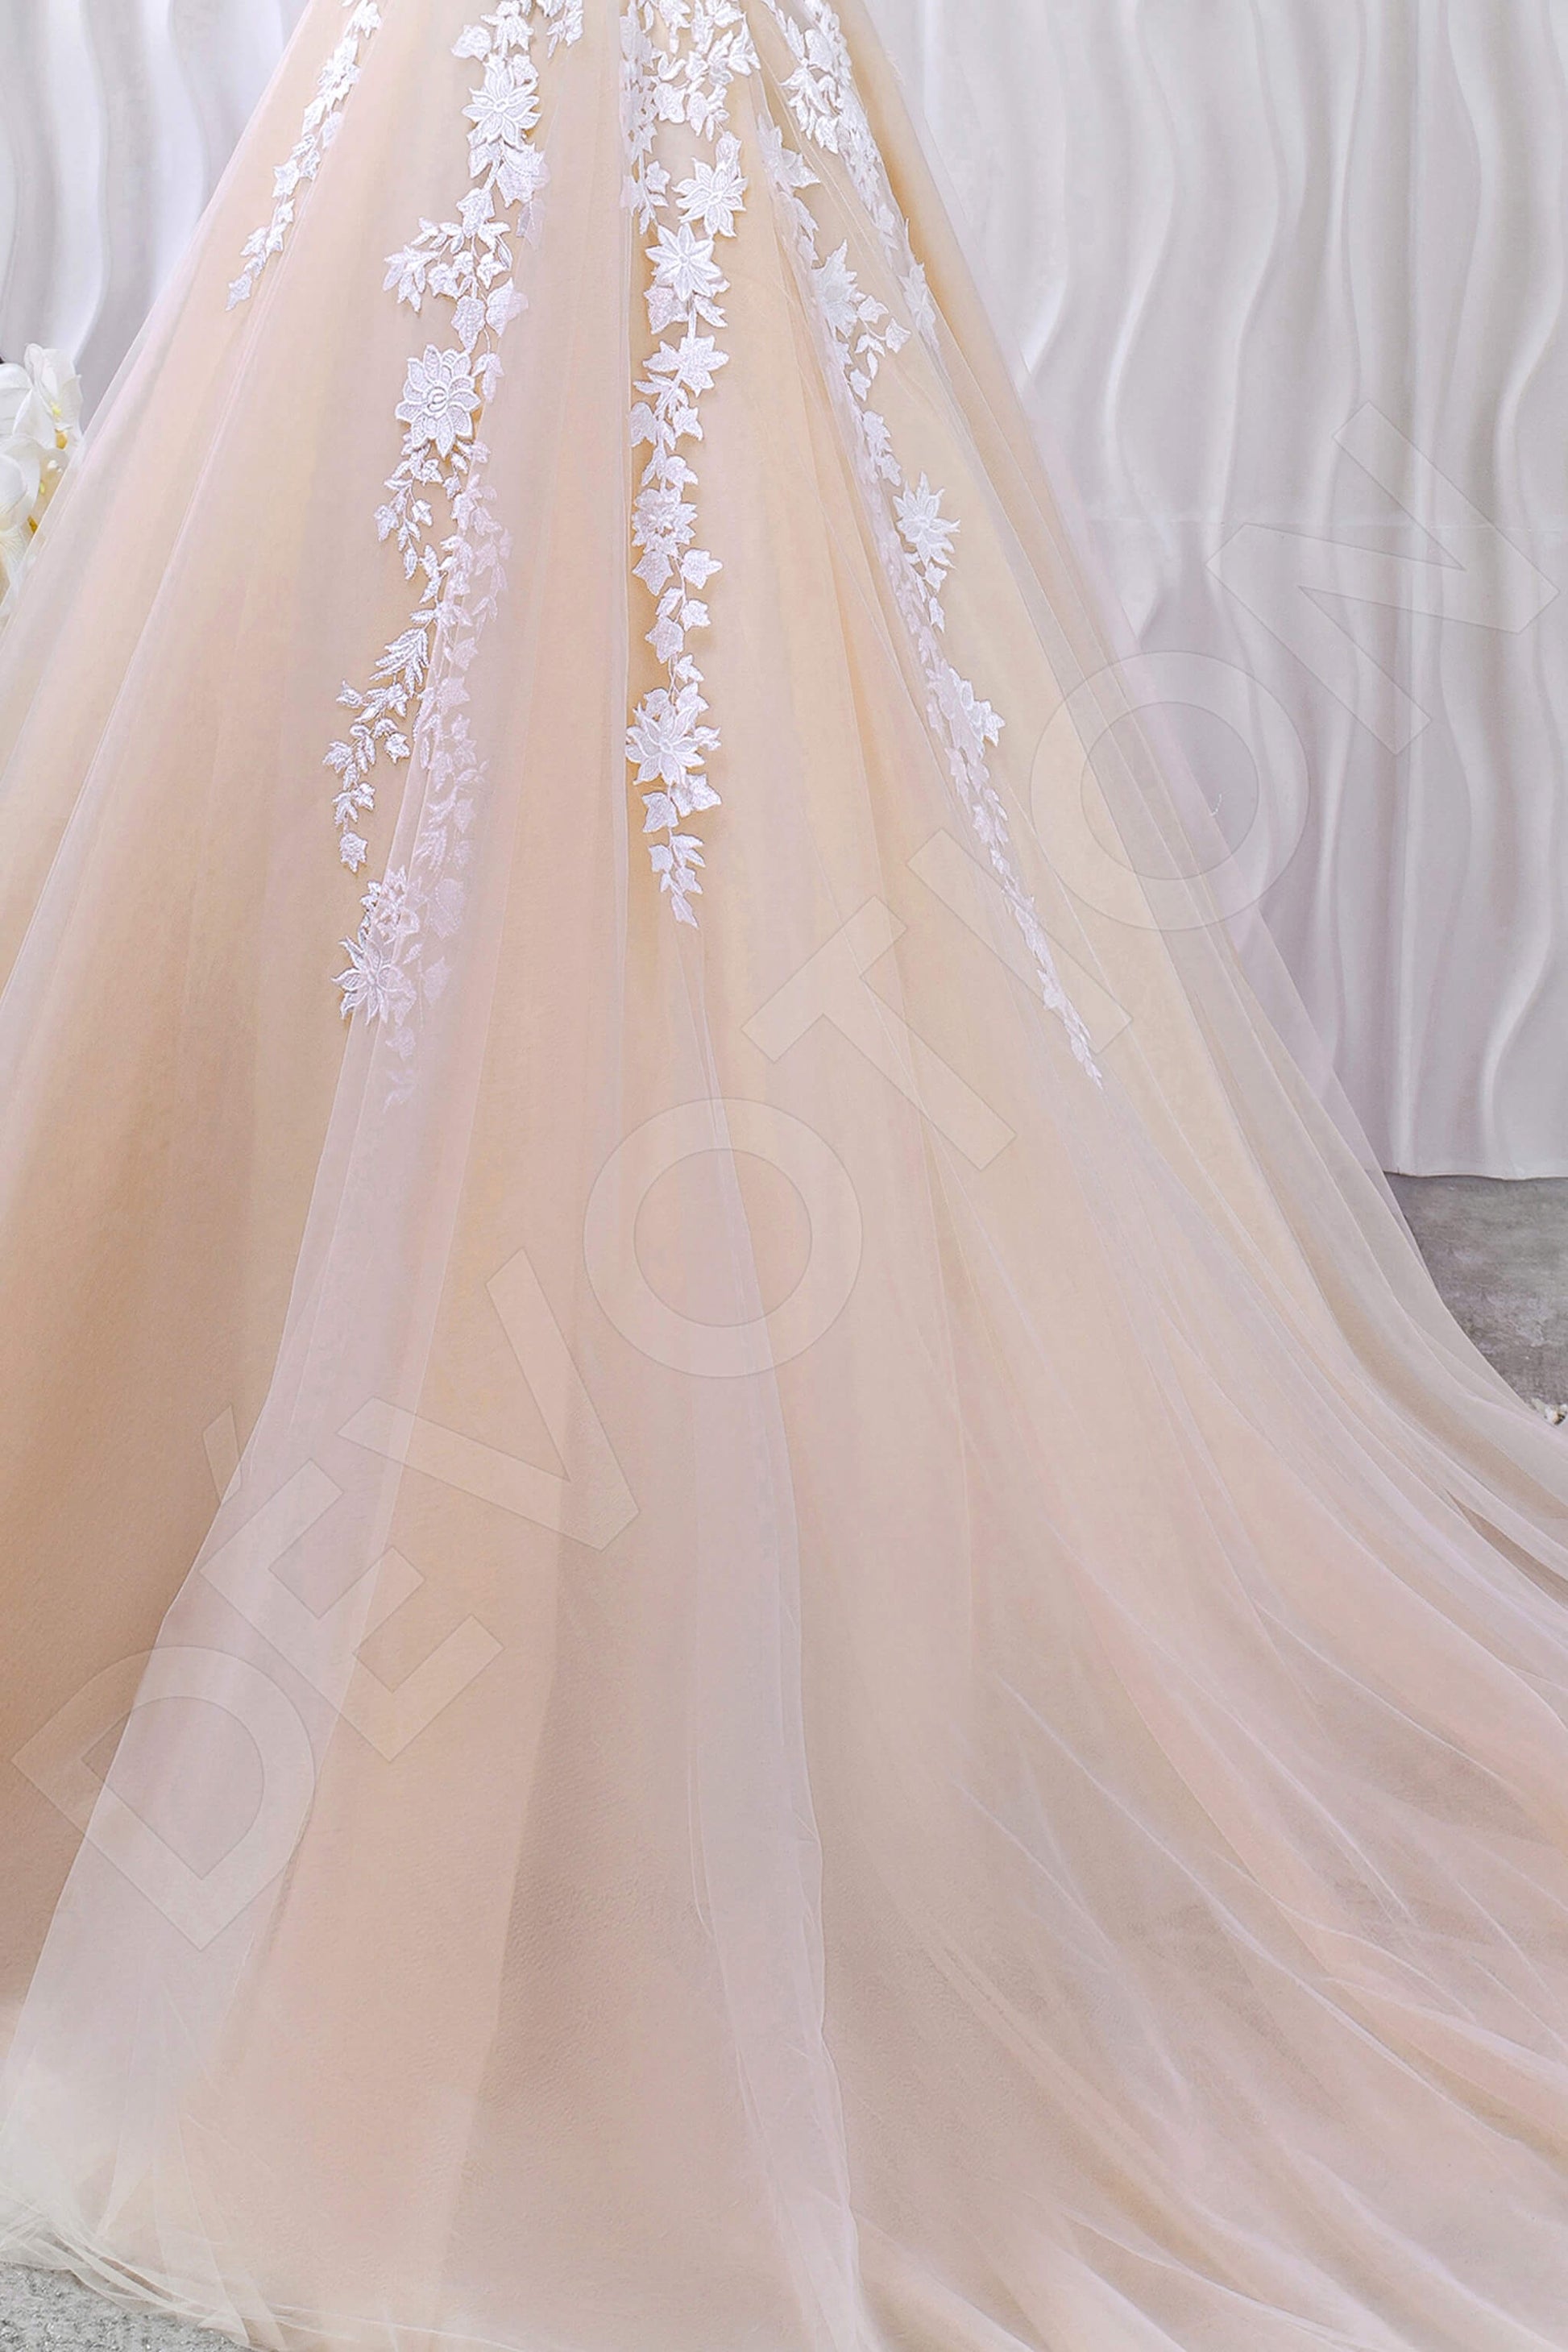 Dalma Princess/Ball Gown Illusion Peach Ivory Wedding dress